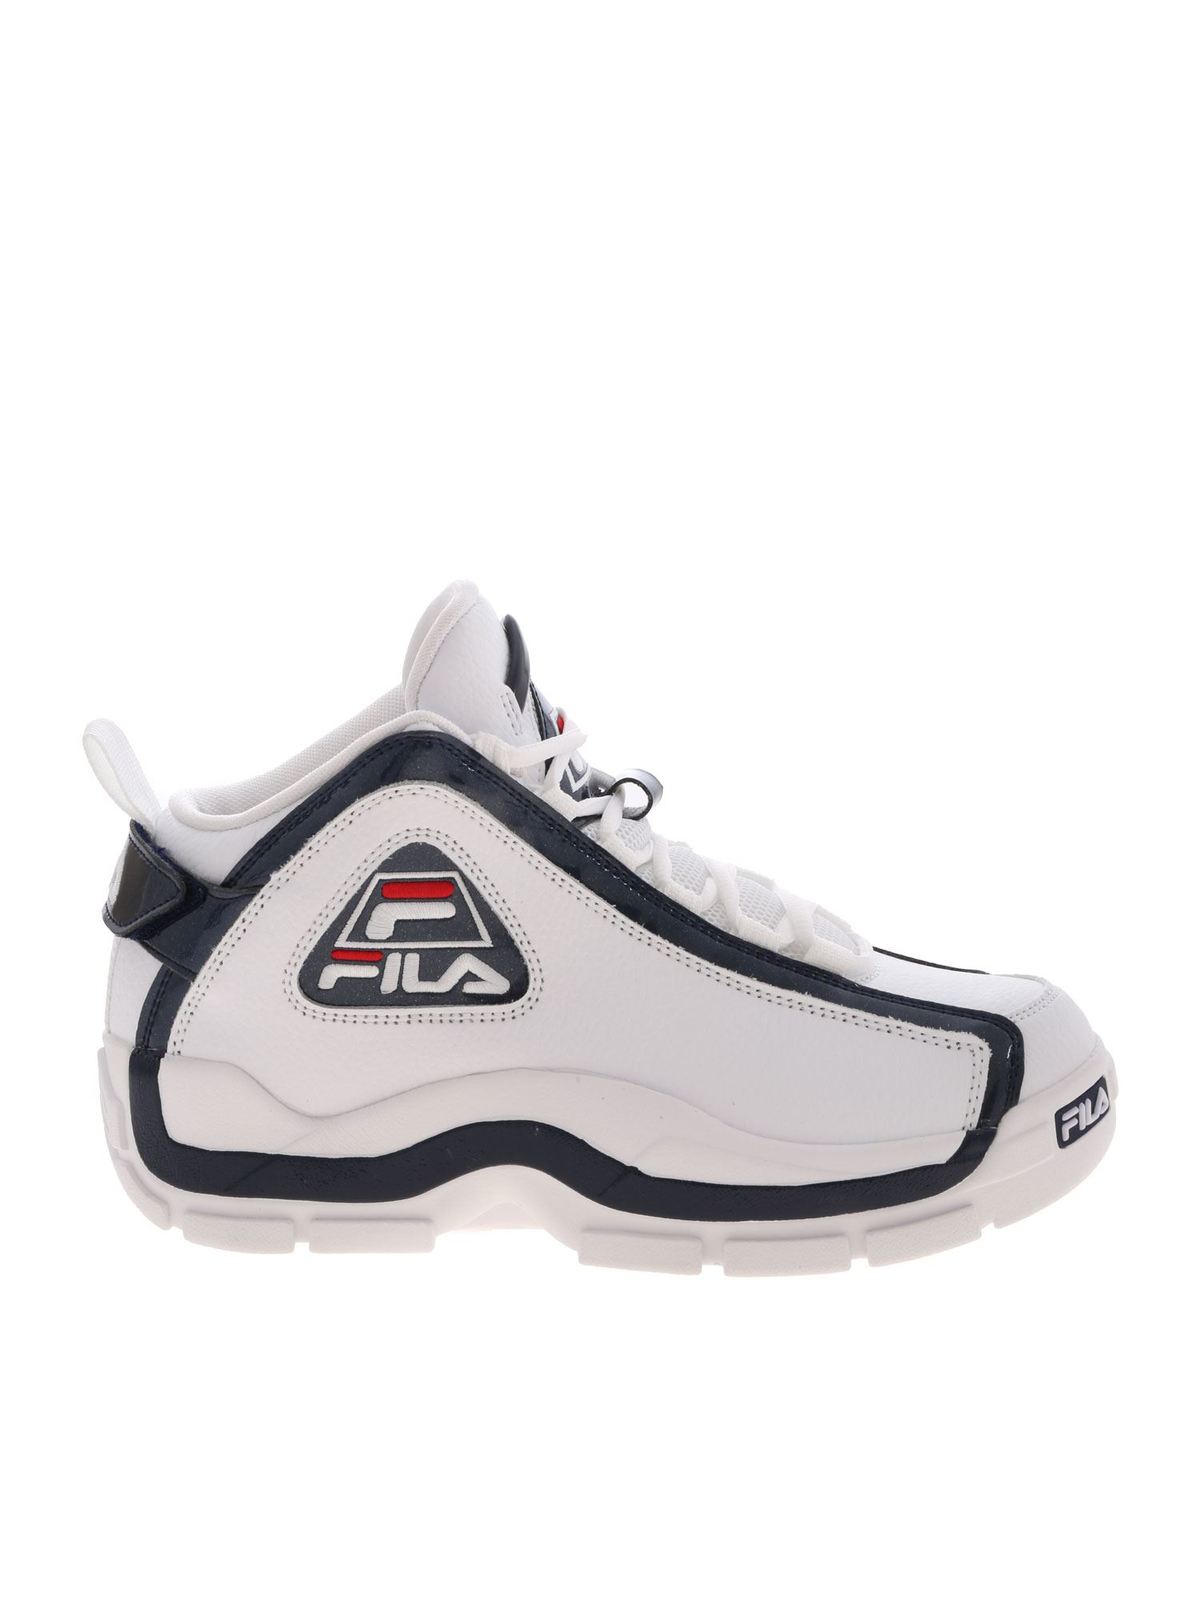 Fila - Grant Hill 2 sneakers in 101078801M